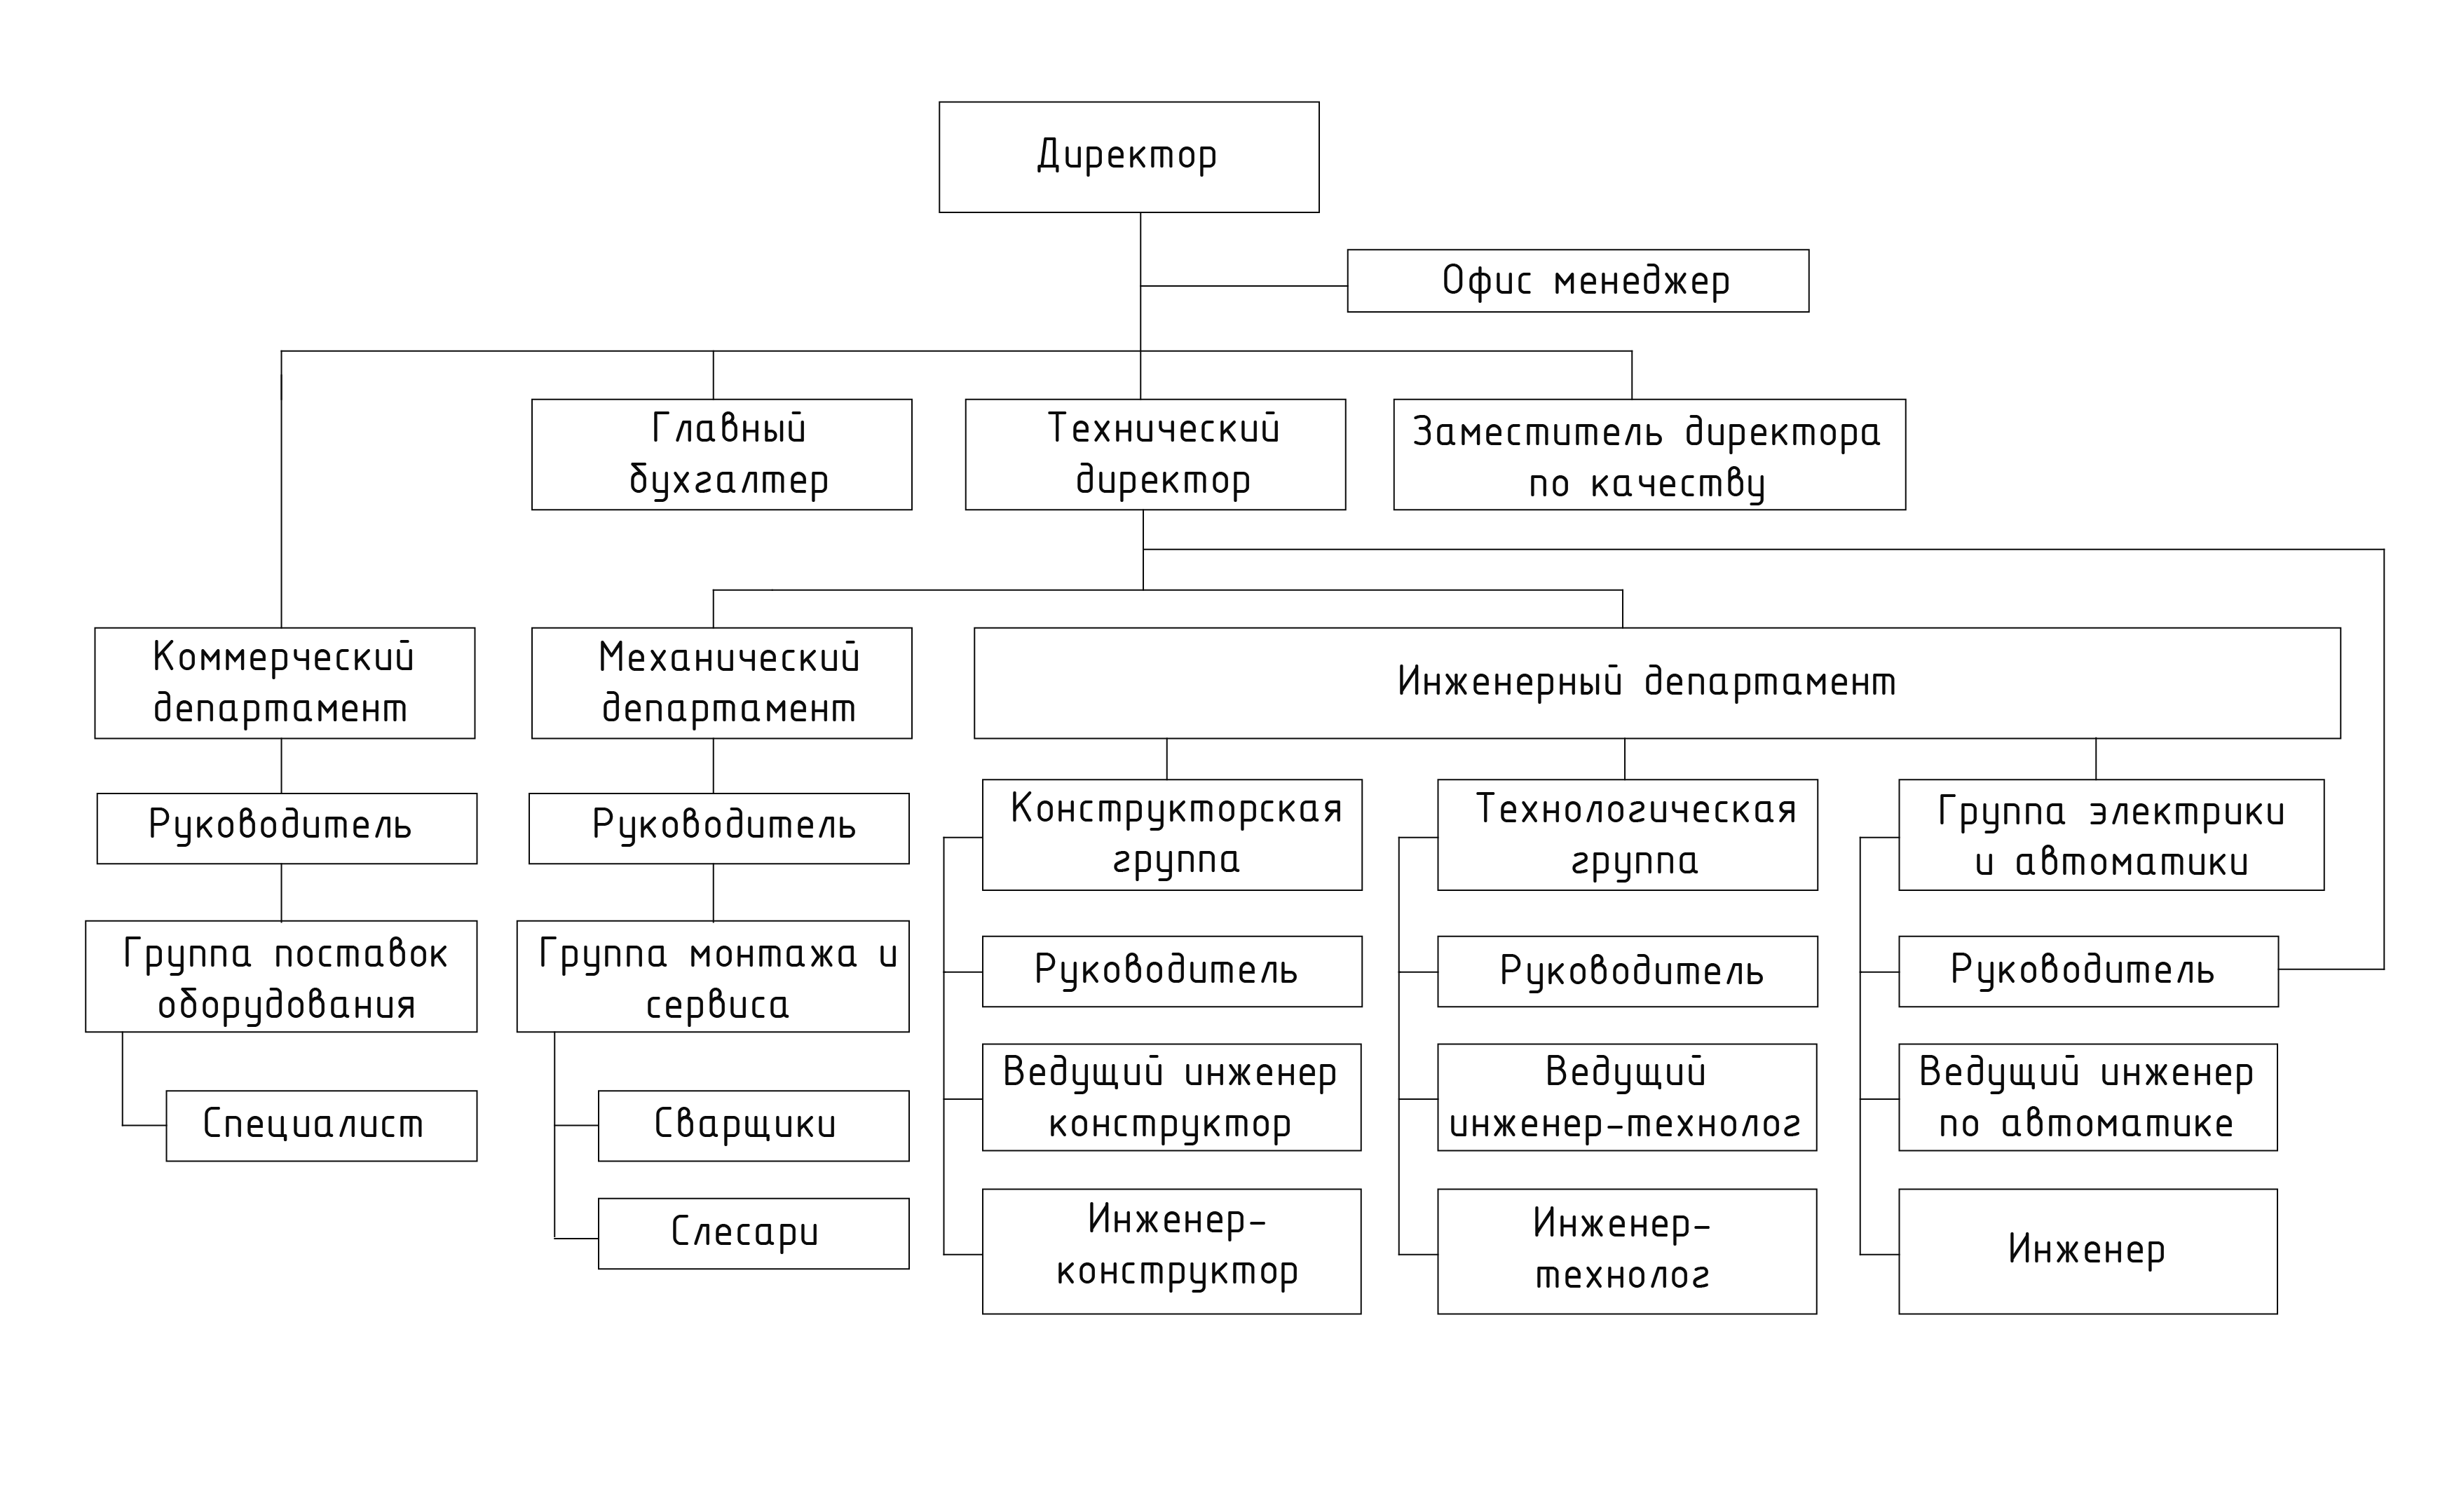 Structure RUS